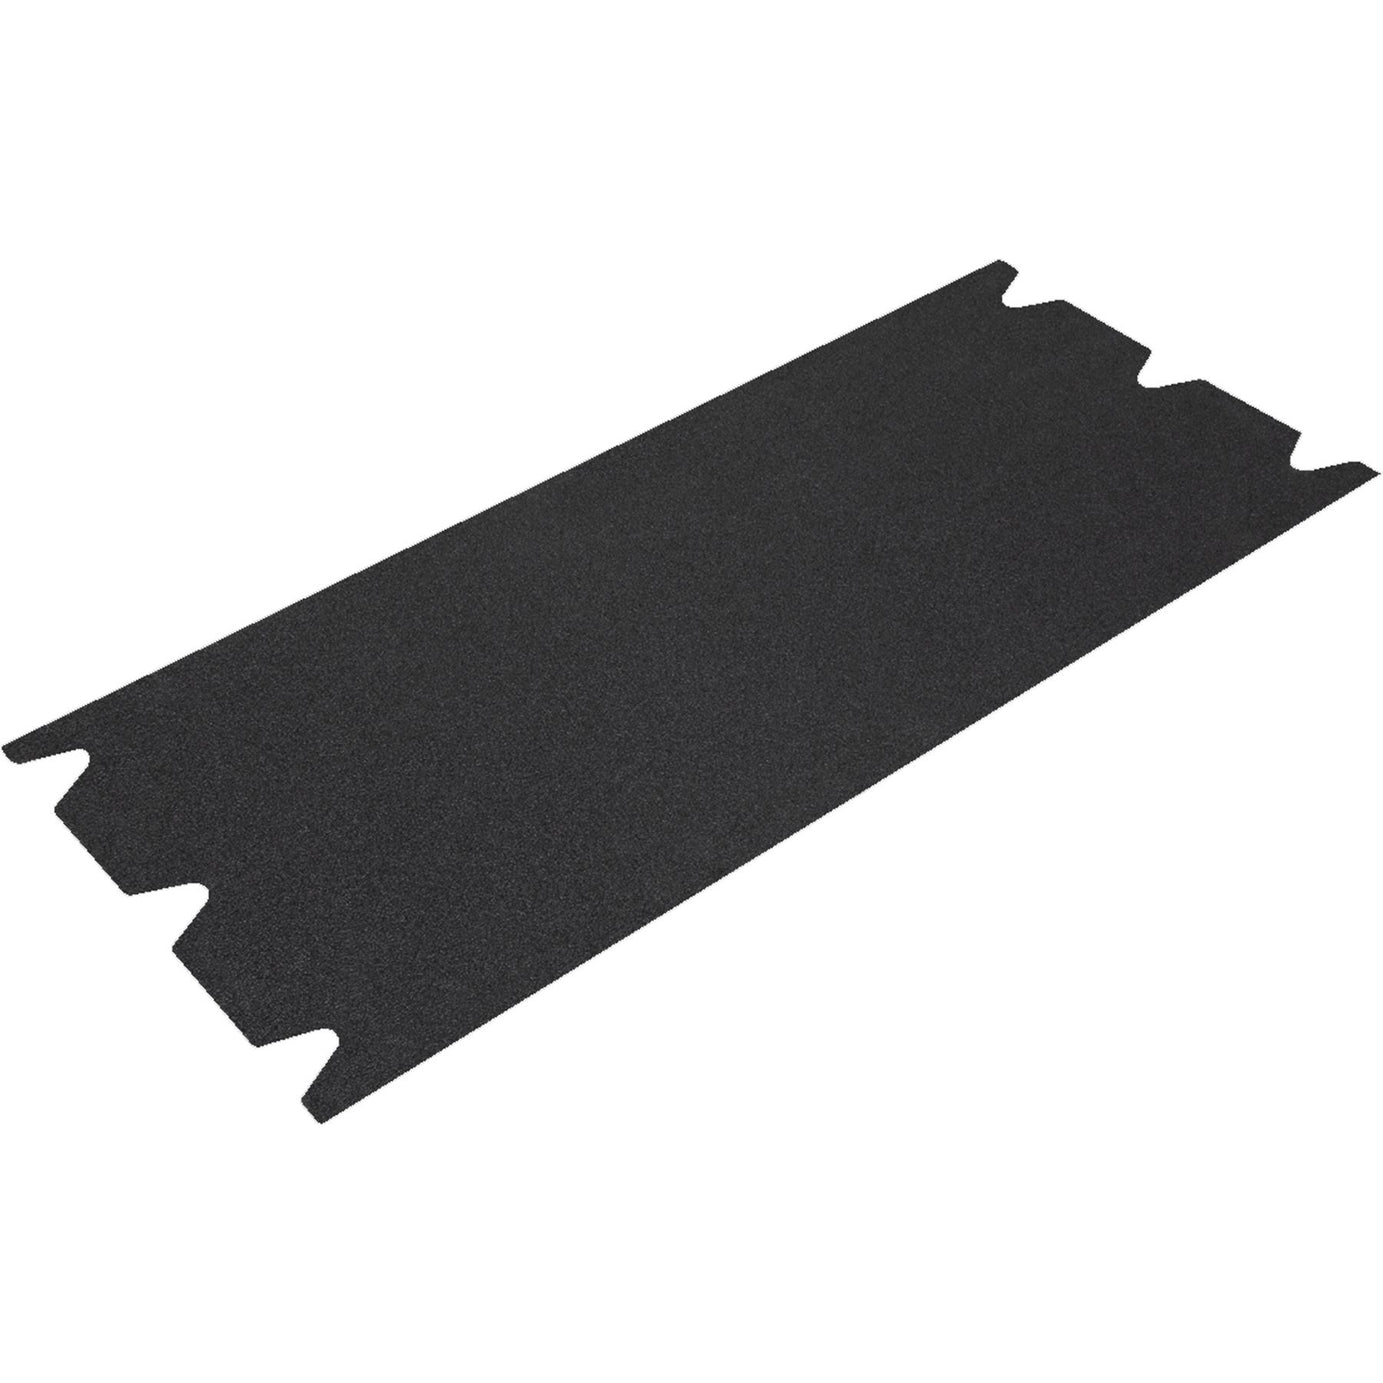 Sealey Floor Sanding Sheet 205 x 470mm 60Grit - Pack of 25